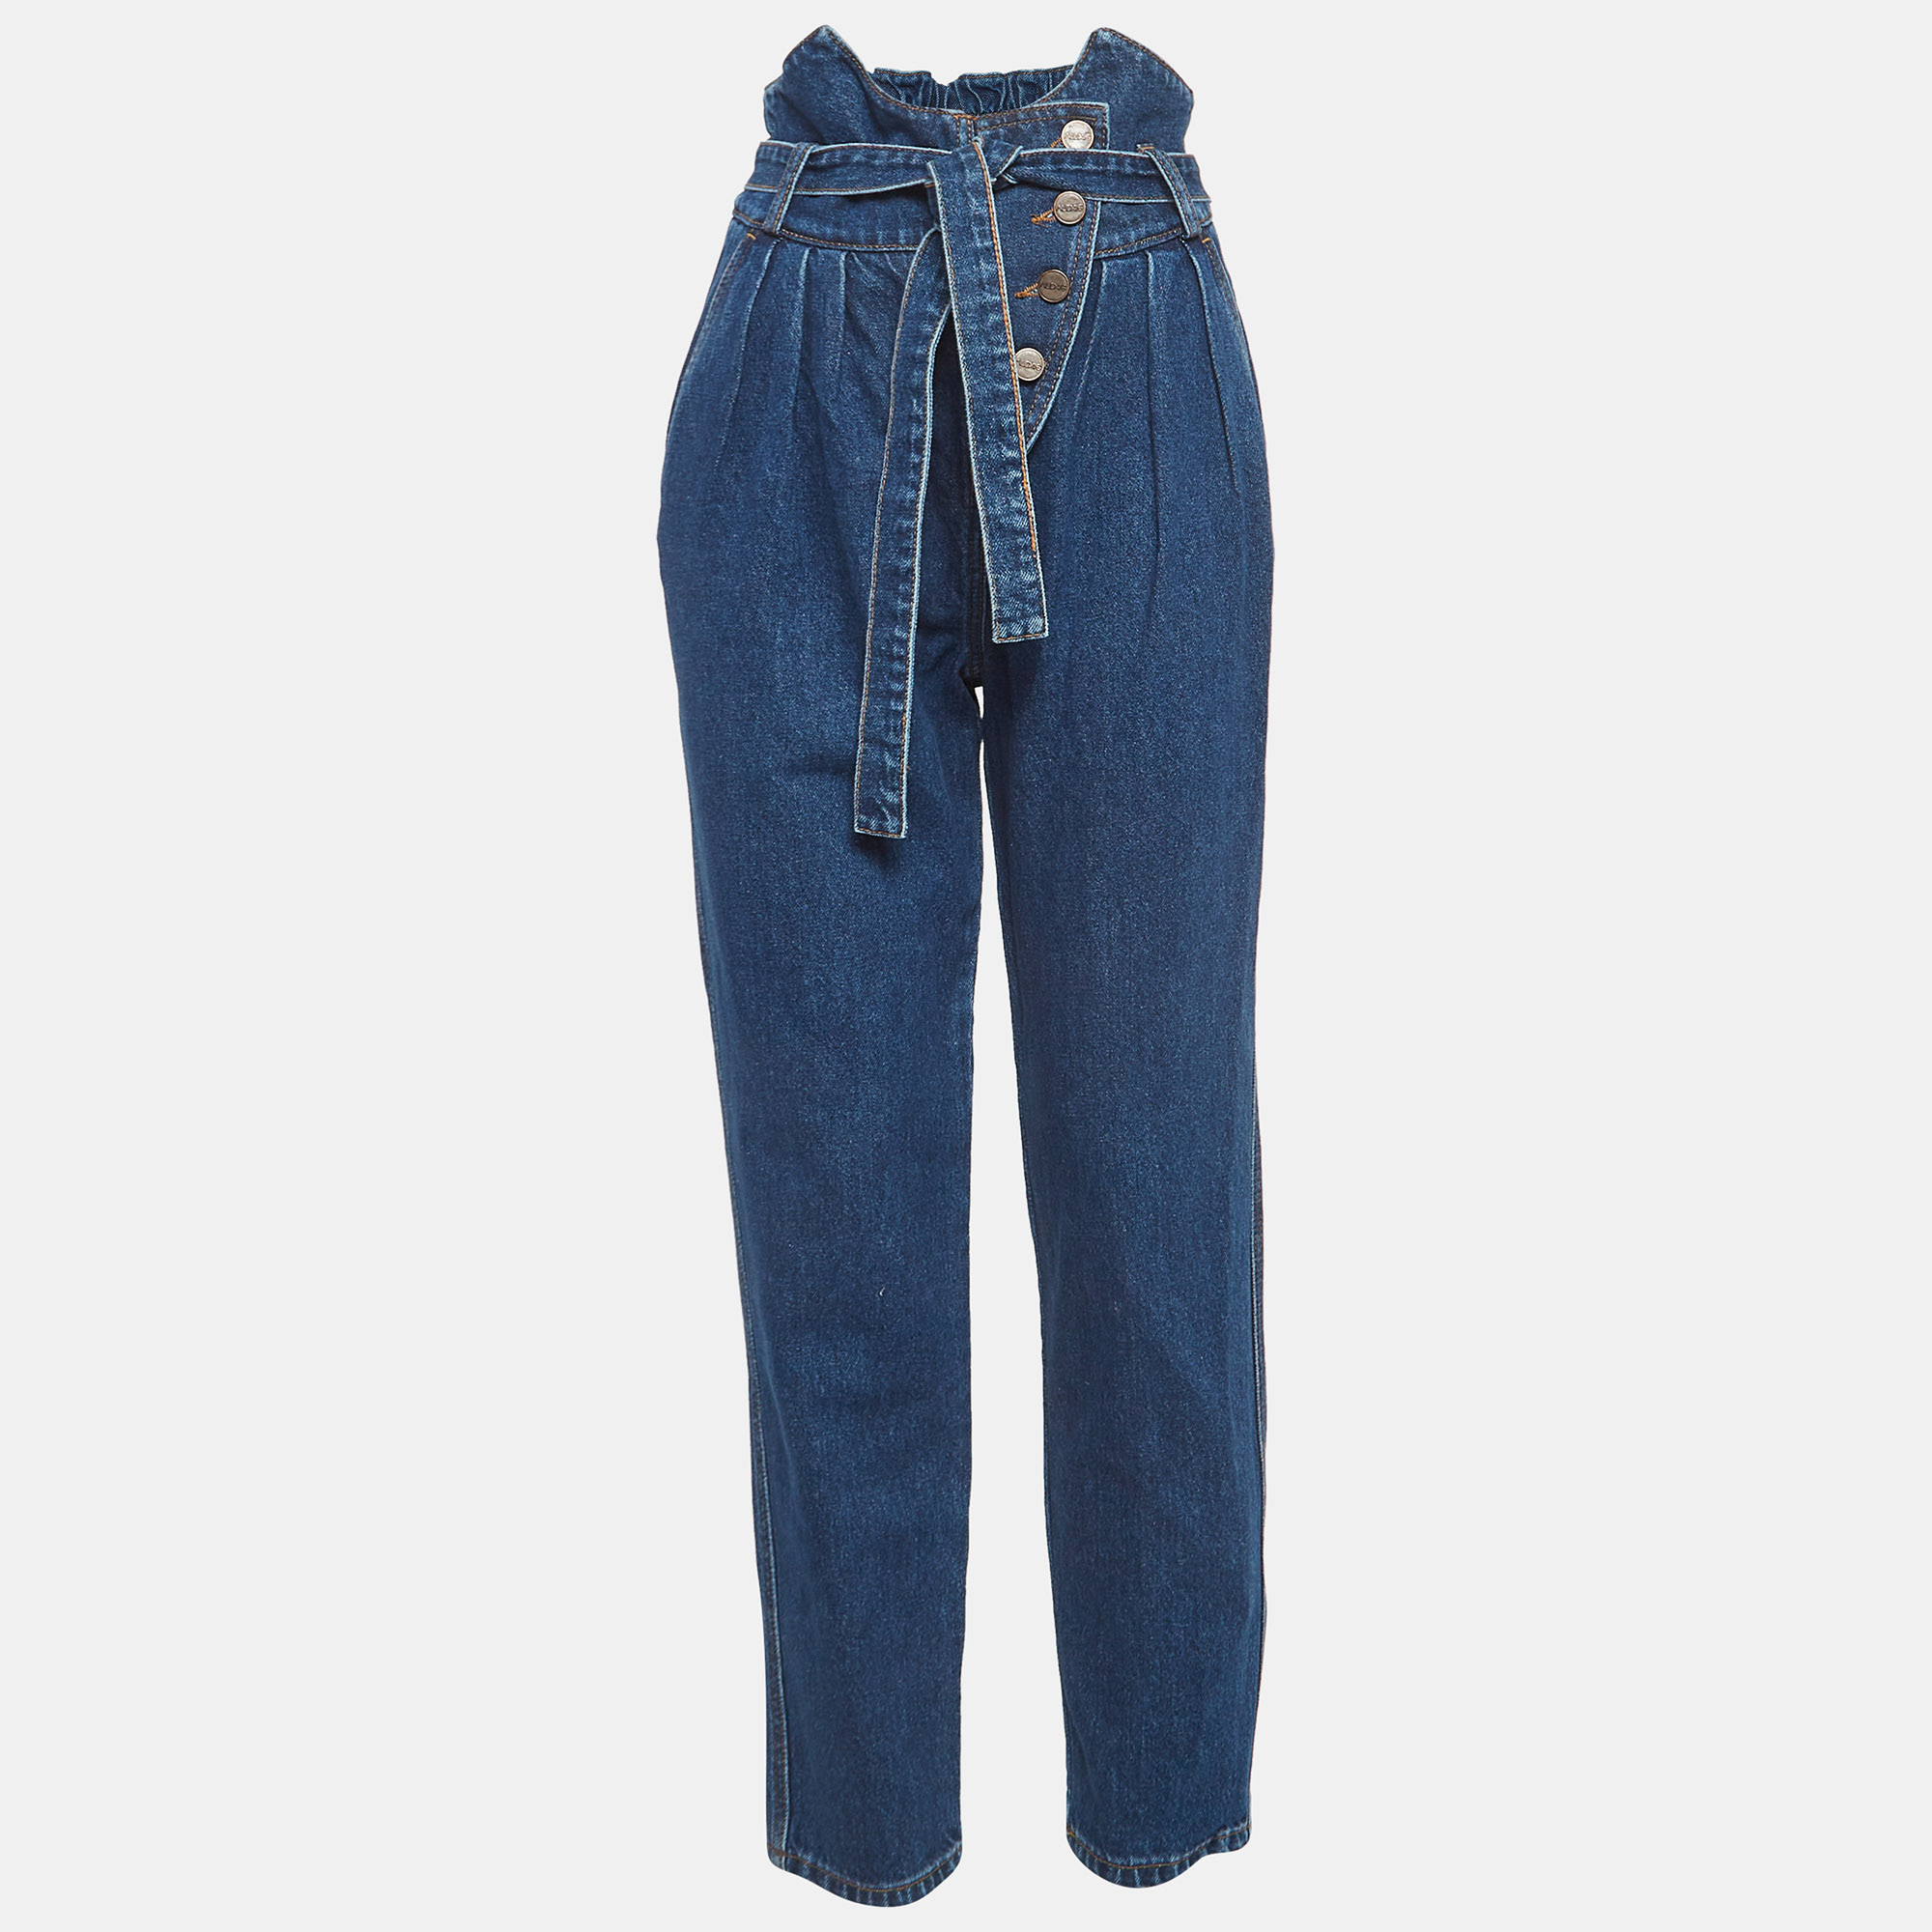 Alexis blue denim belted high waist jeans s